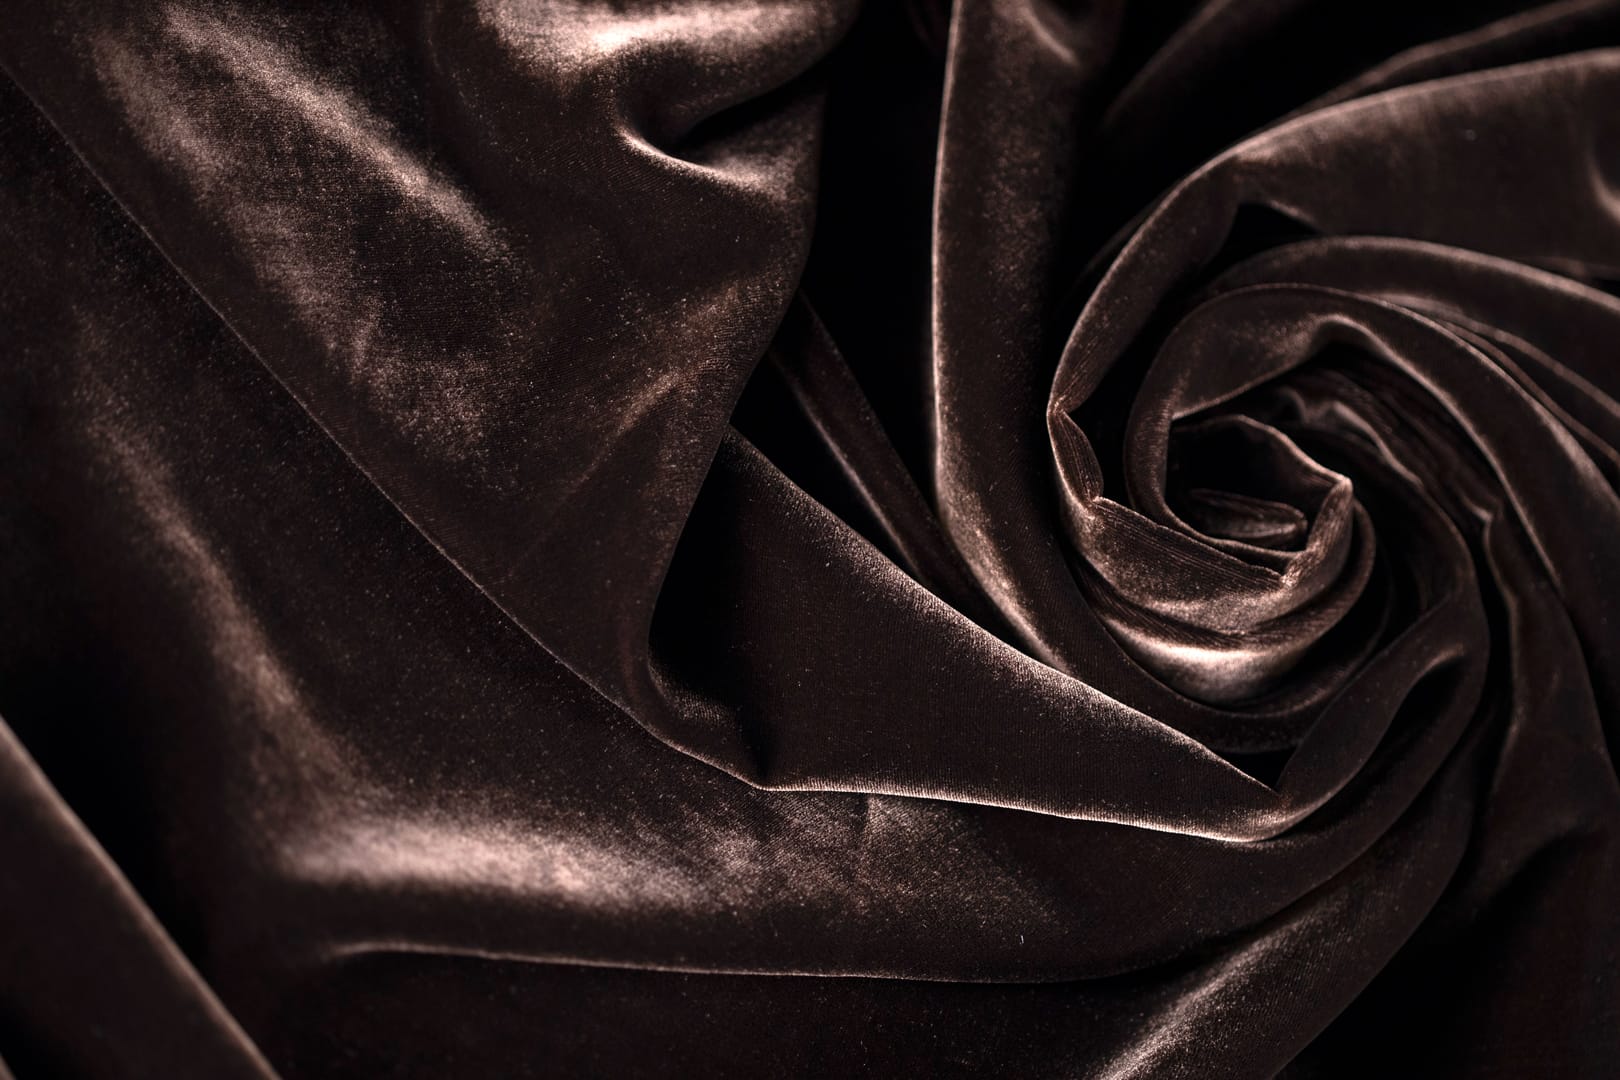 Brown Silk and Viscose Velvet Fabric -007